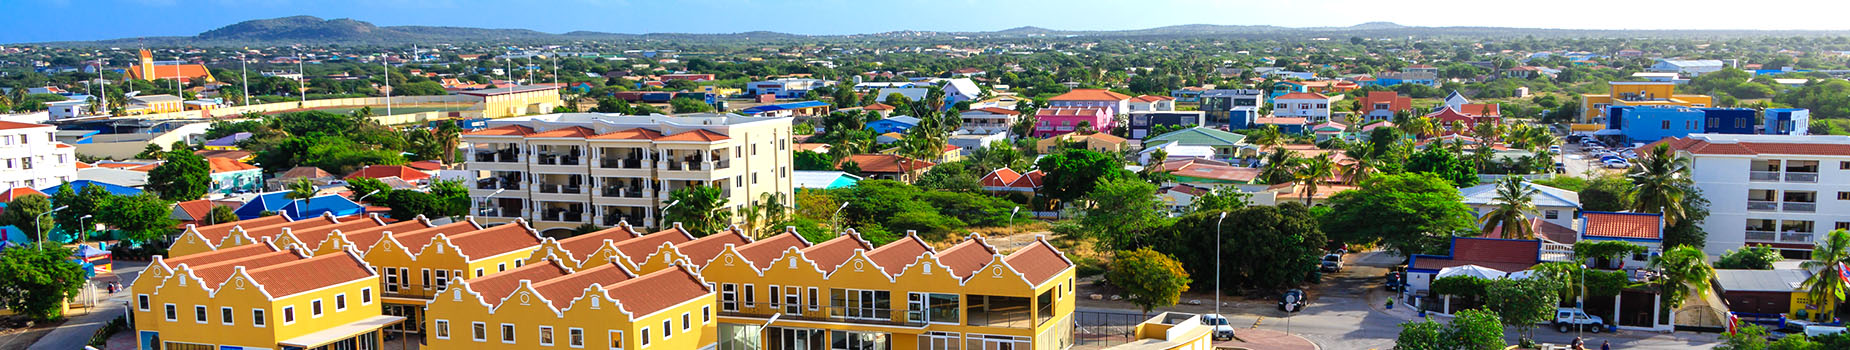 Rondreis Bonaire